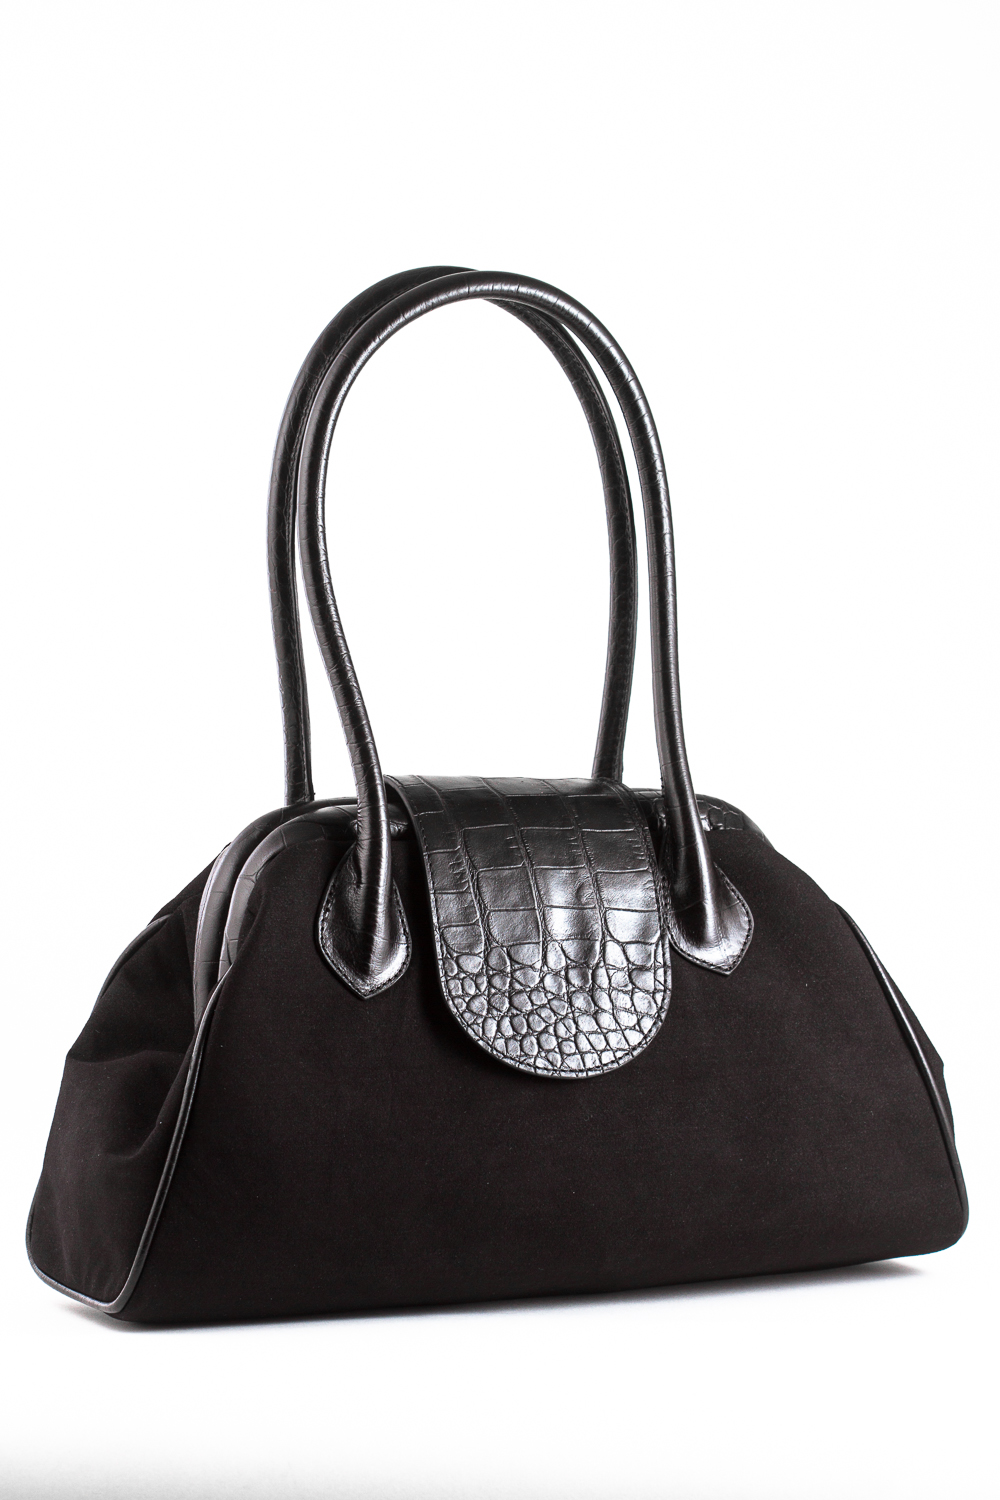 Black Ultra Suede Handbag - Doctor Bag Style